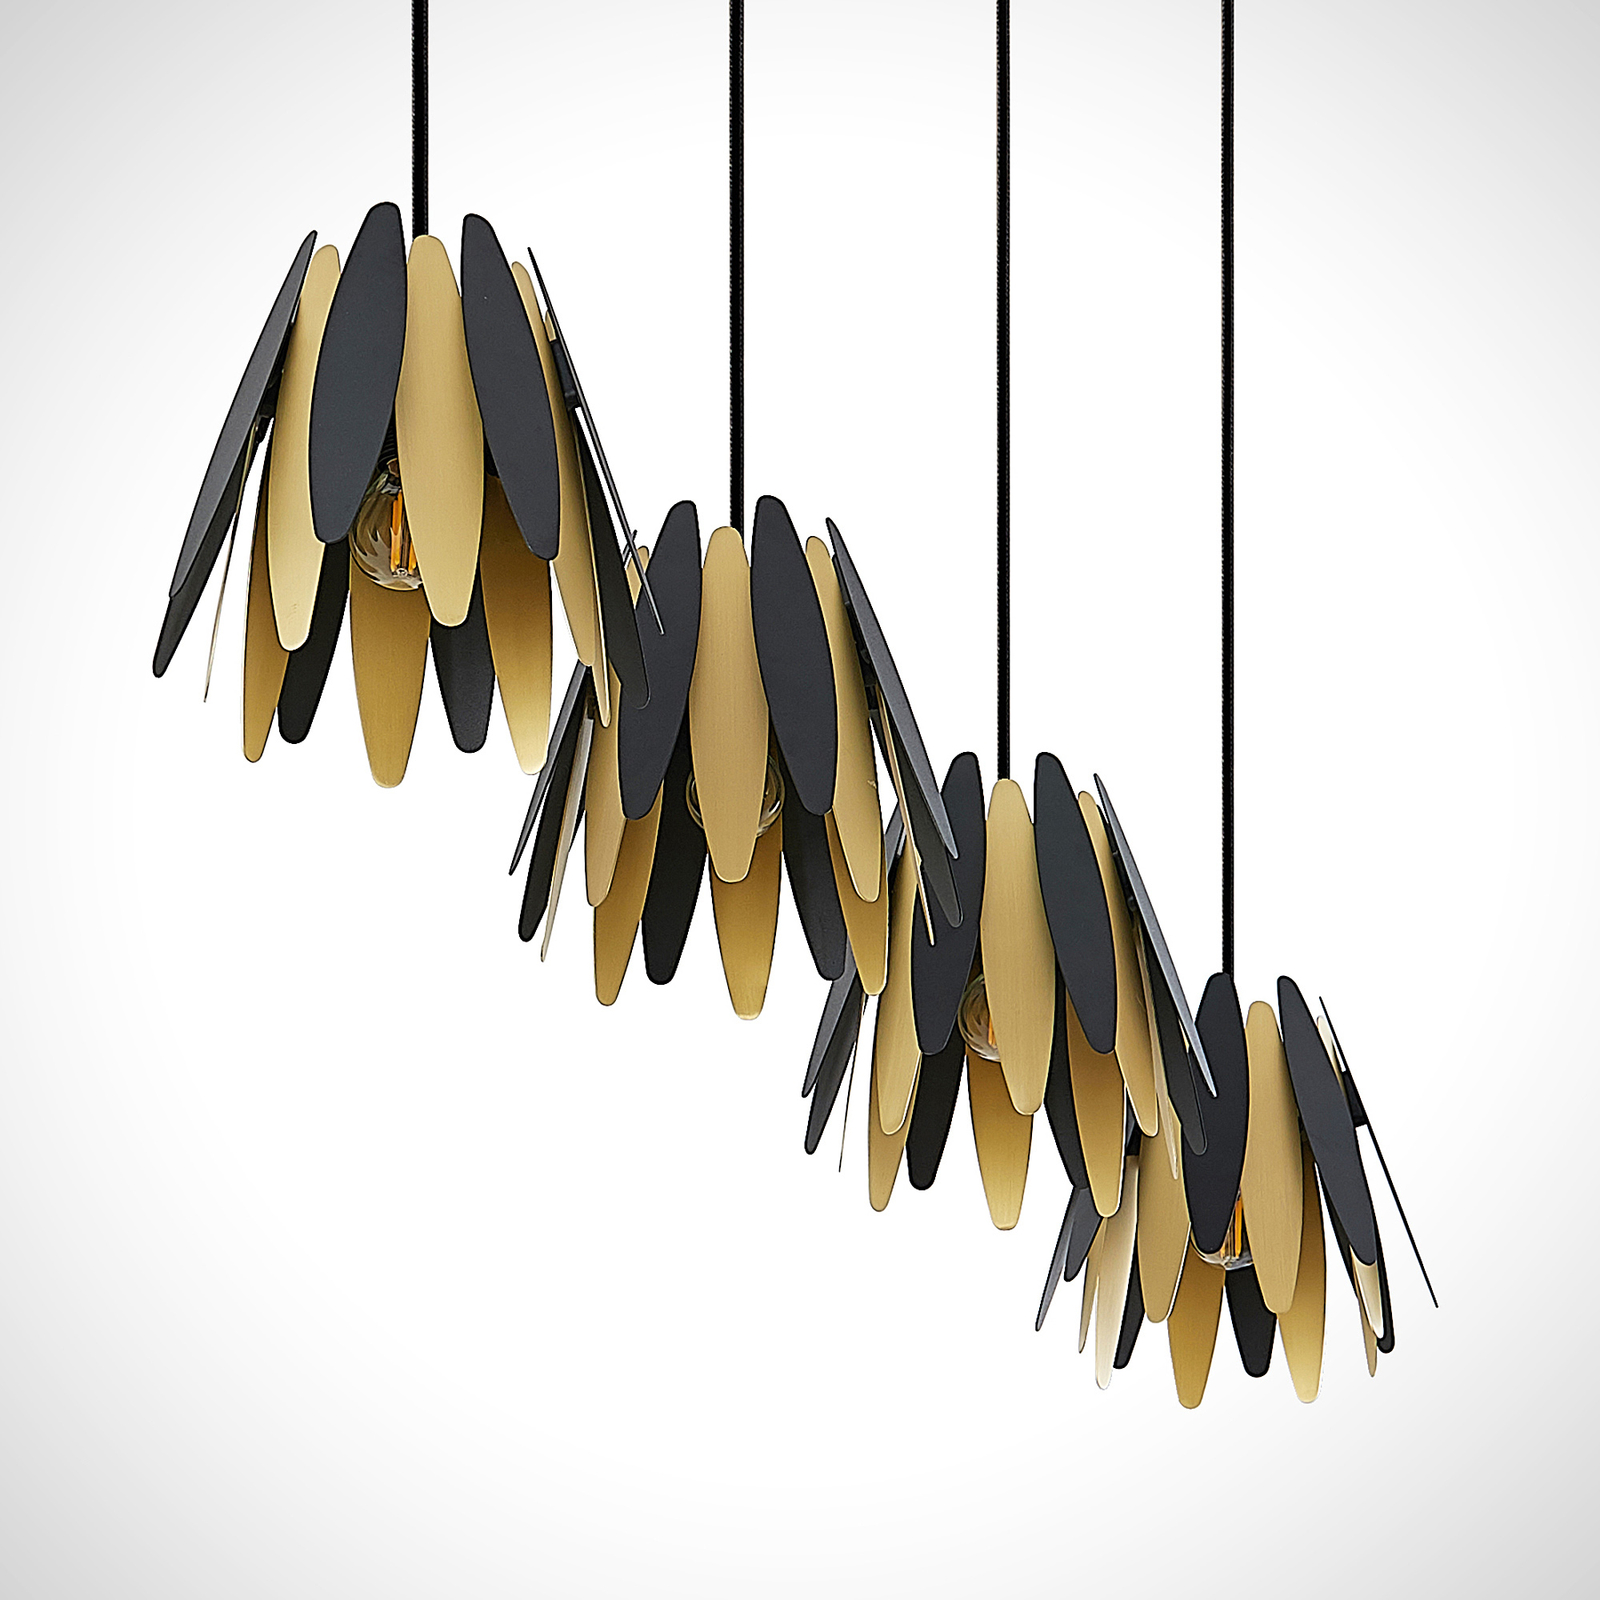 Lucande Lounit hanglamp, zwart-goud, 4-lamps